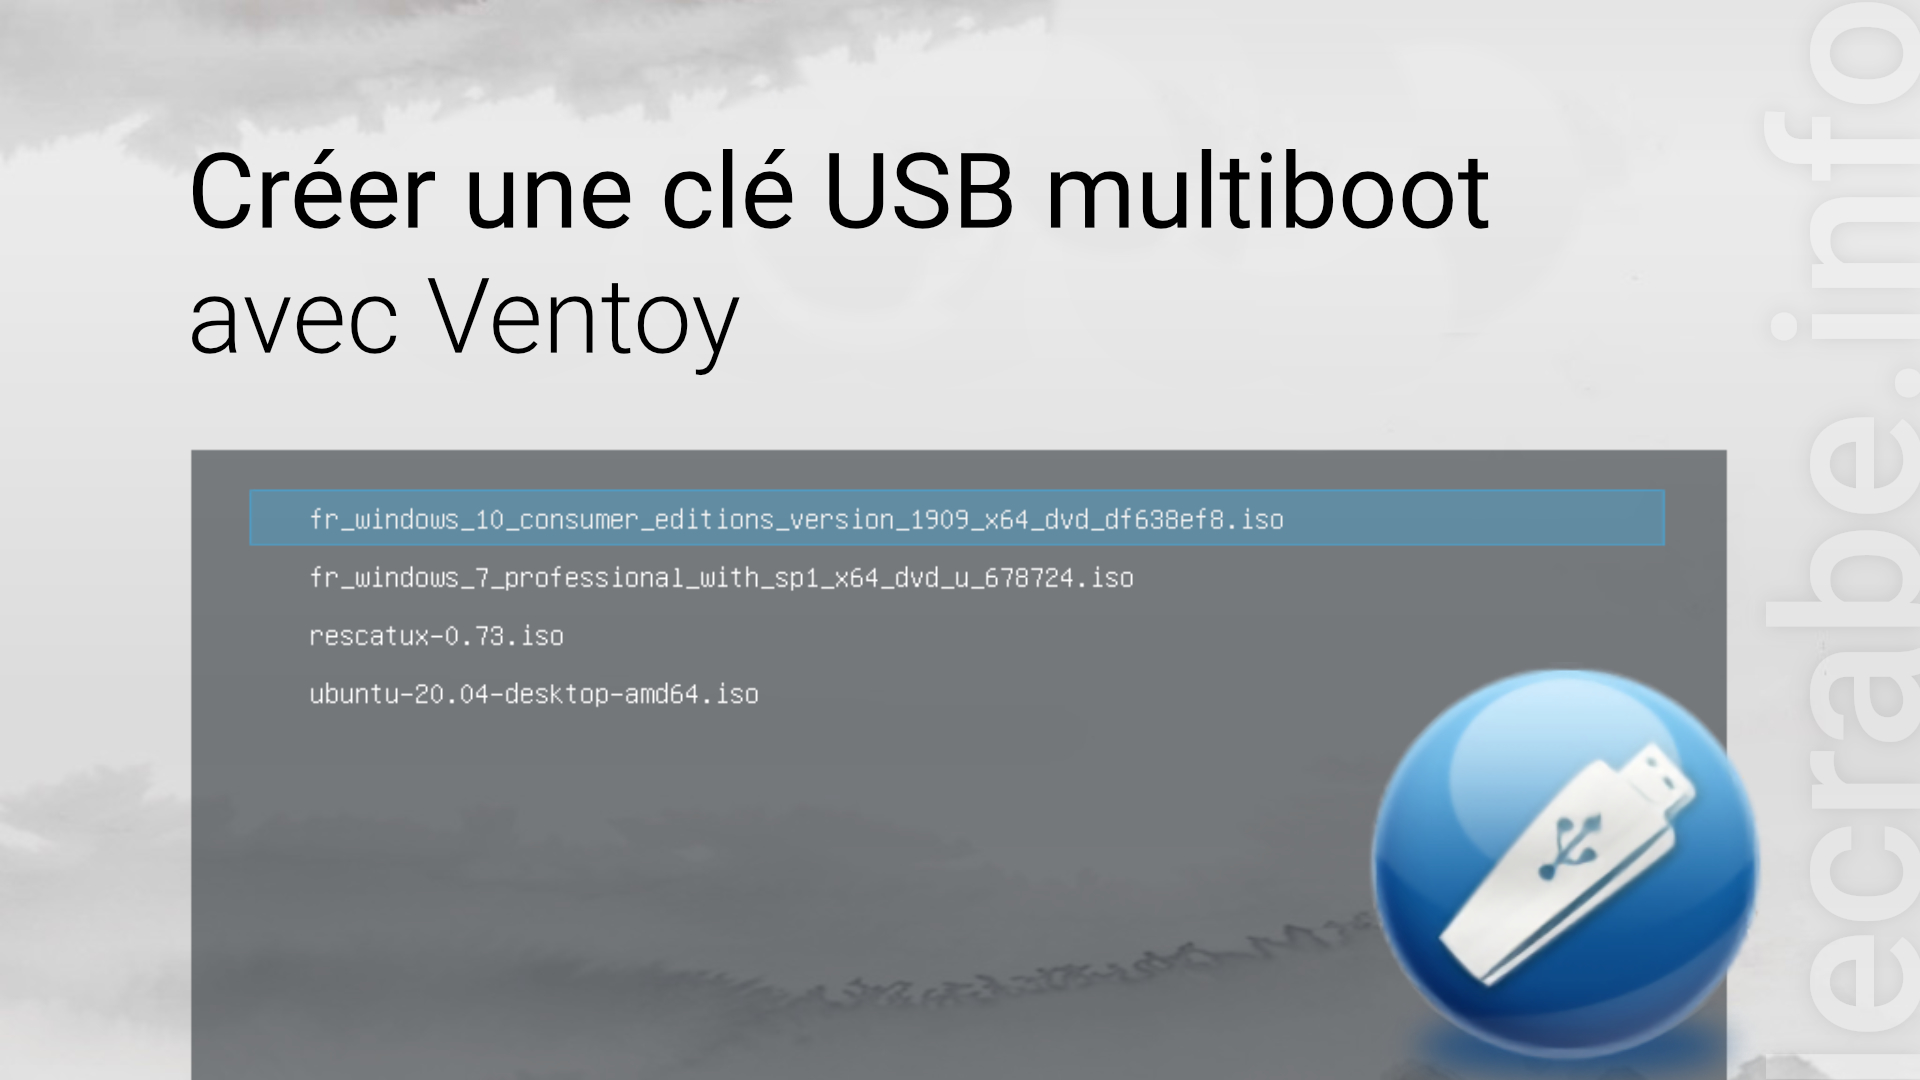 Ventoy 1.0.96 instal